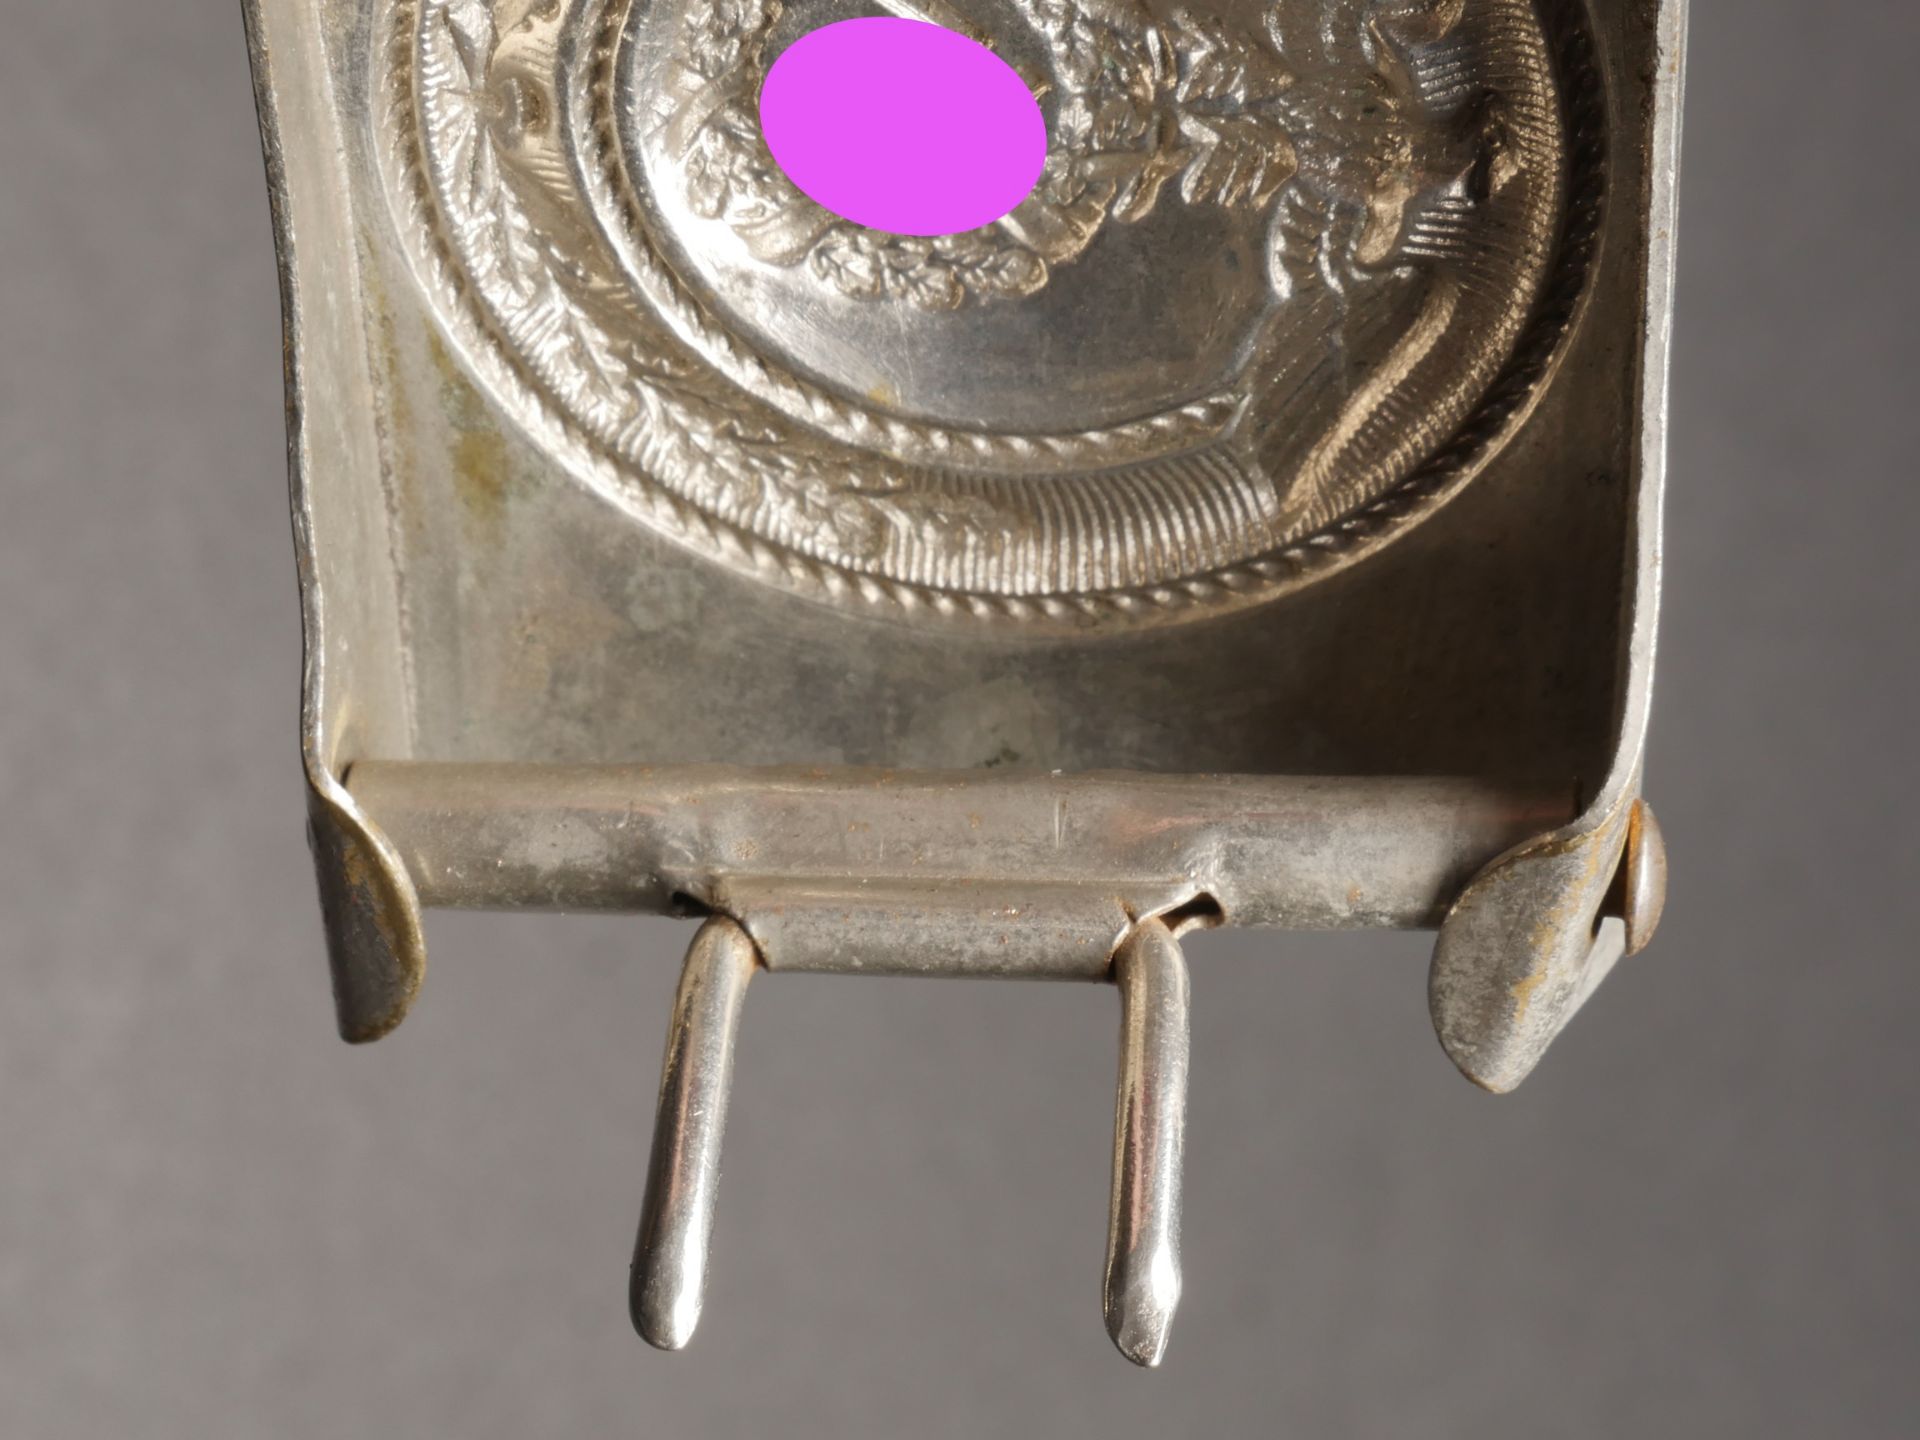 Boucle de ceinturon NSKK. NSKK belt buckle.  - Image 2 of 5